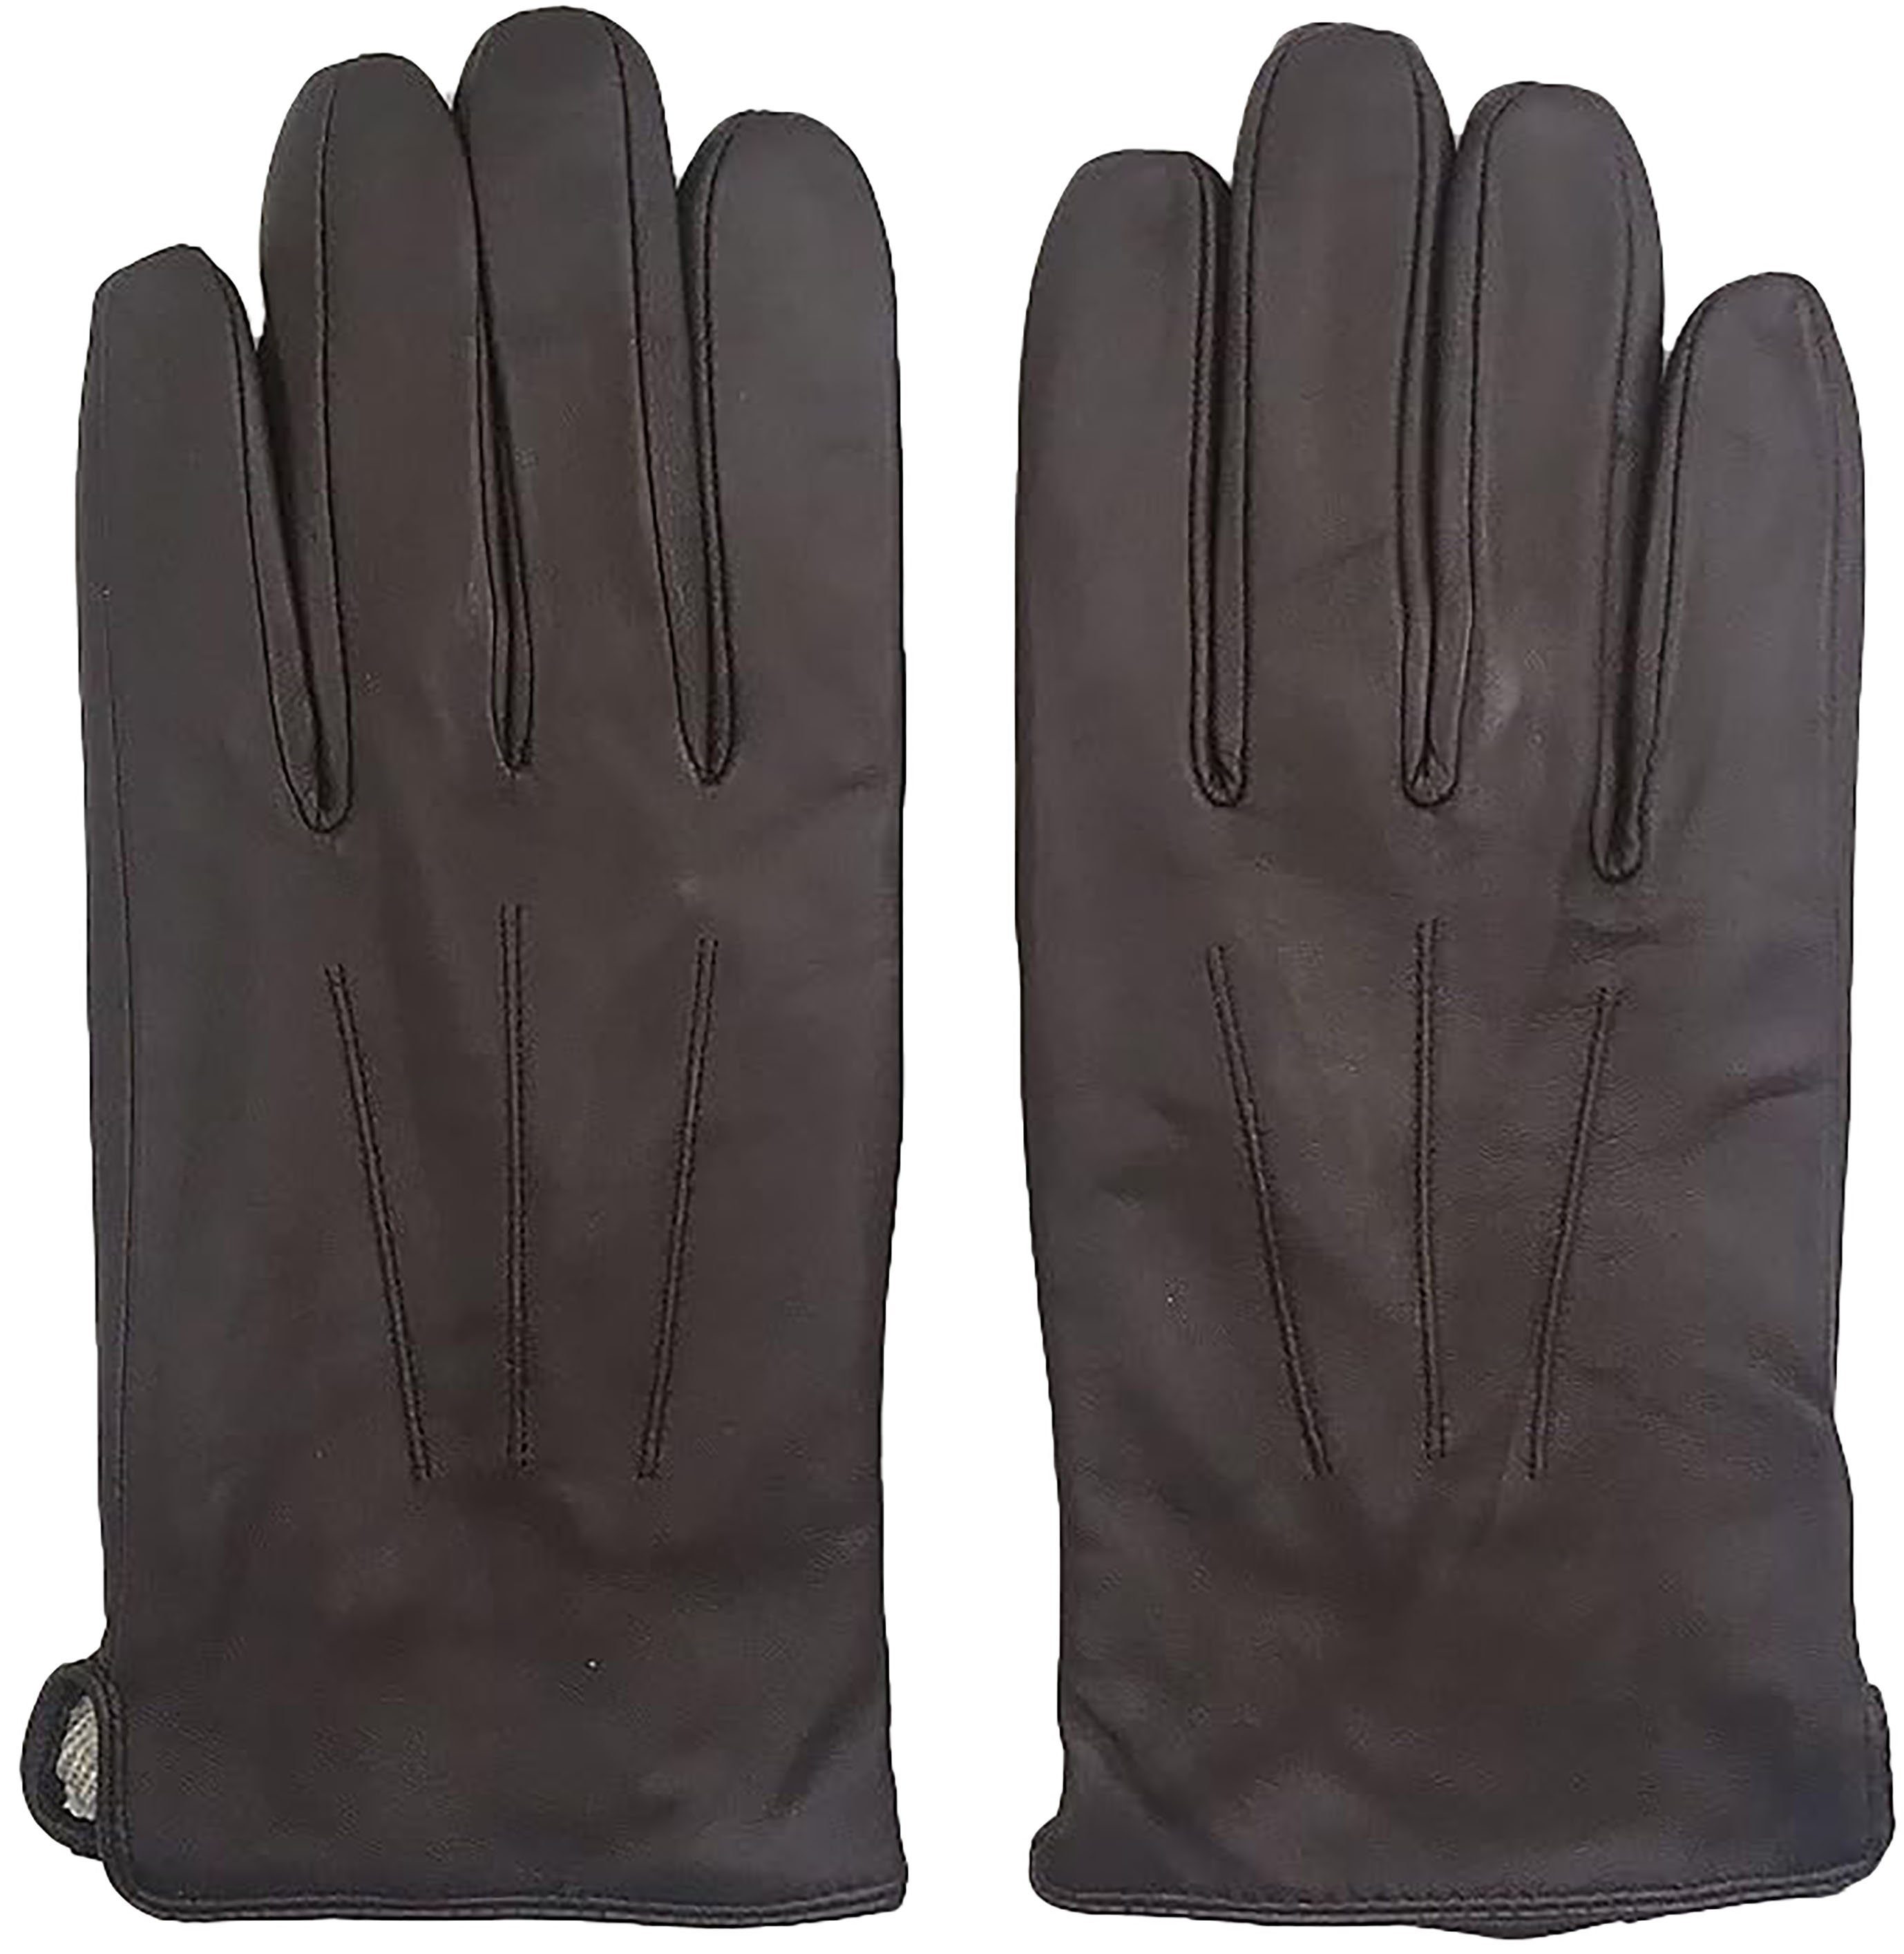 [Einfach zu verwenden] SRRINM Fleecehandschuhe Winter Herren Handschuhe warme Kaschmir Leder